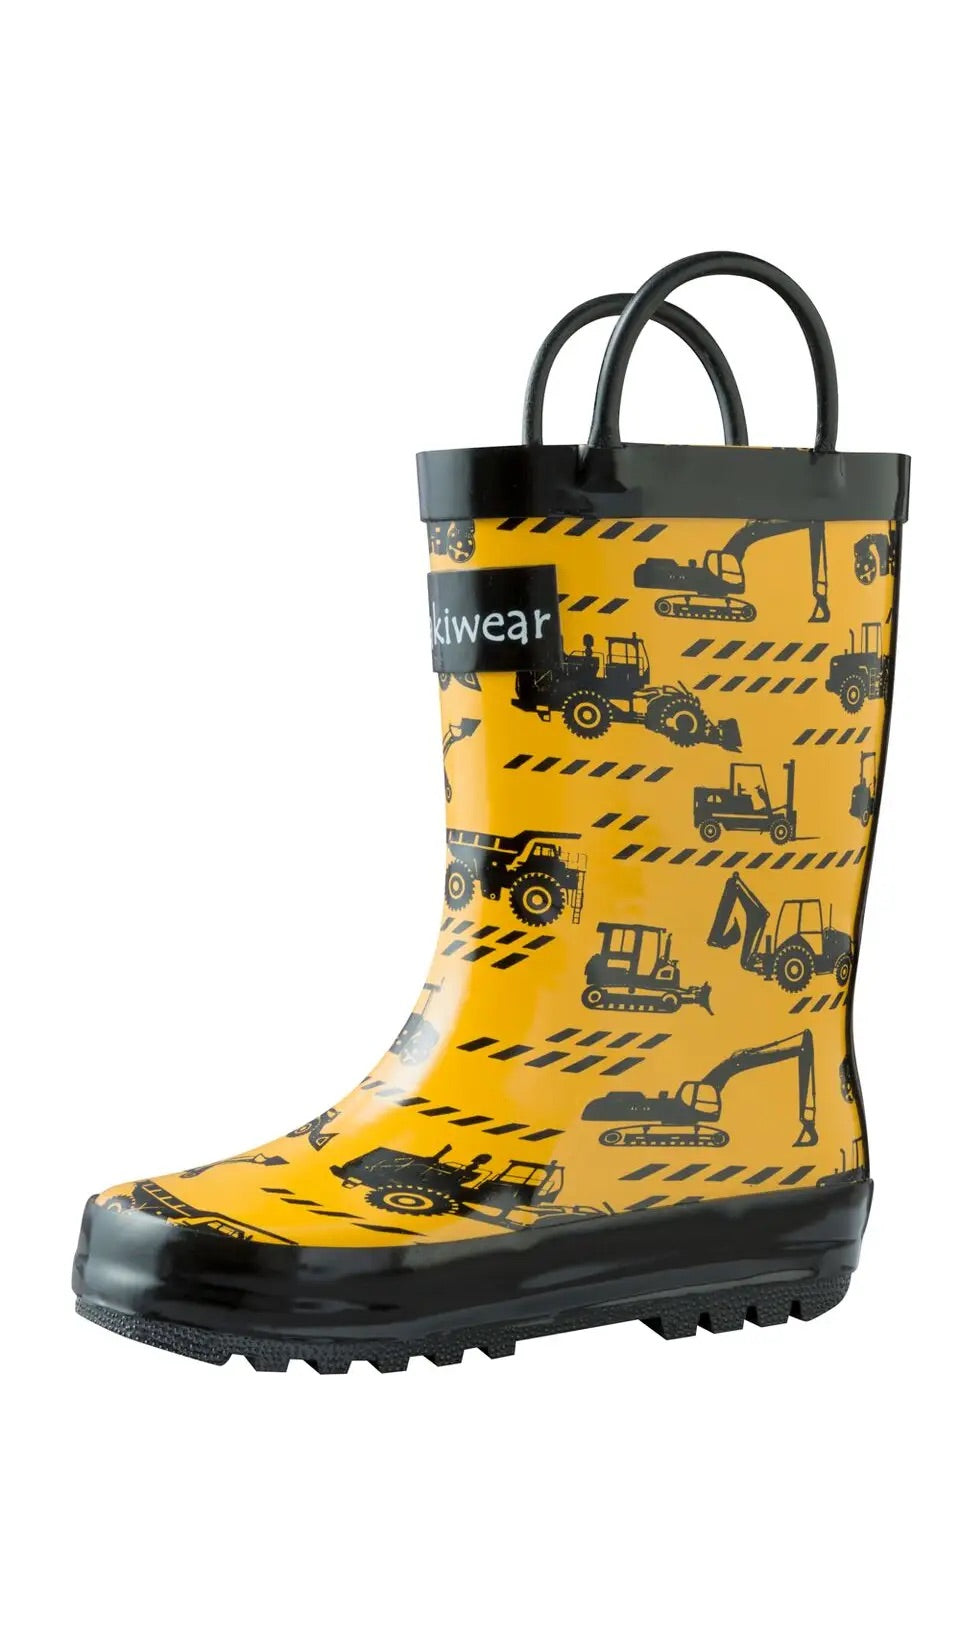 Oaki Rain boot - construction